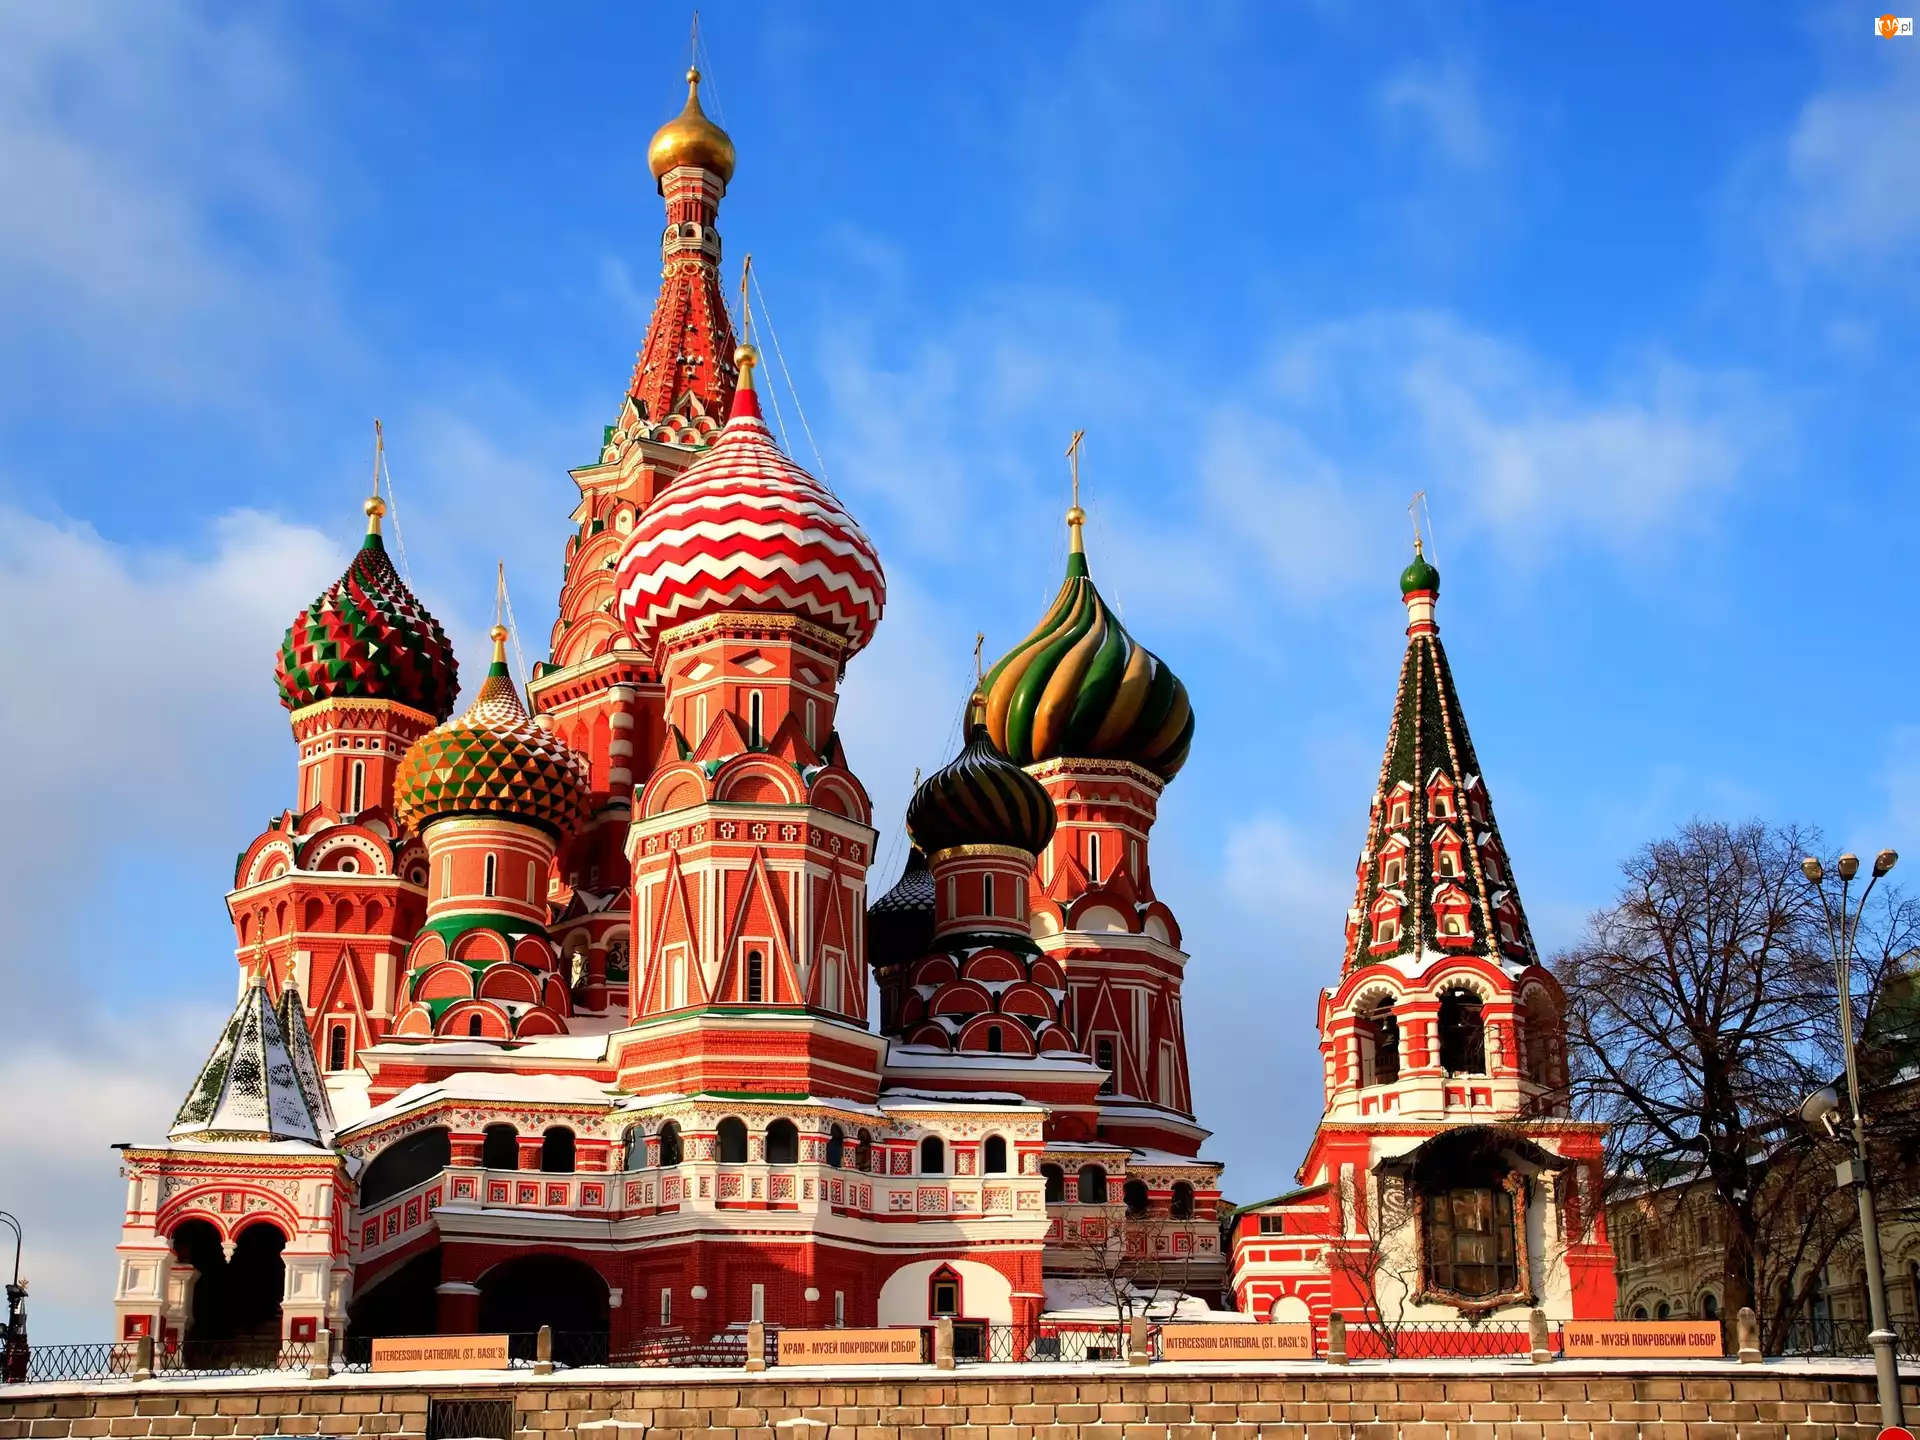 Katedra, Rosja, Saint Basils, Moskwa